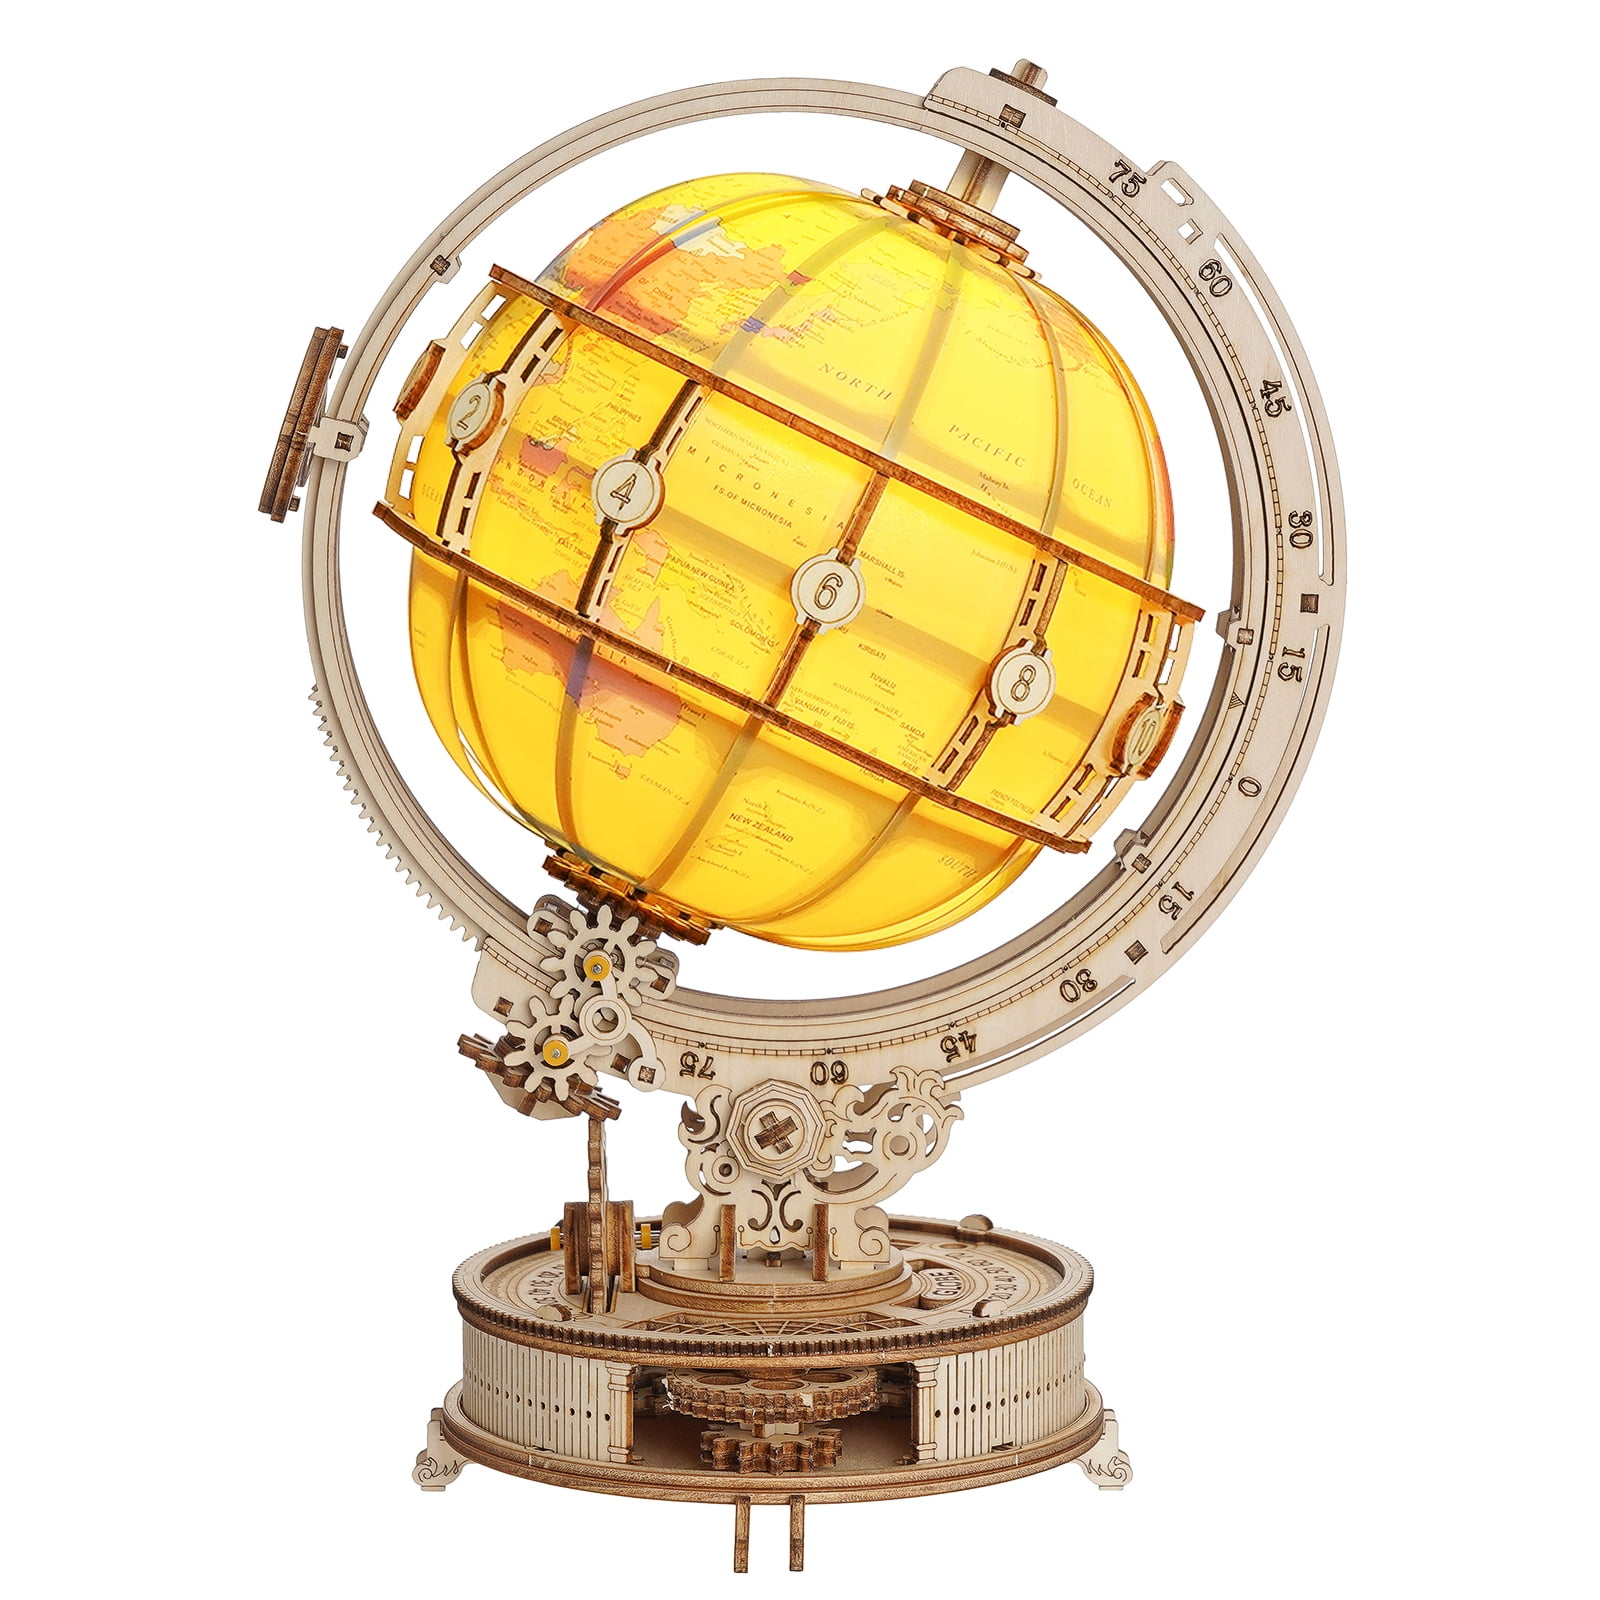 BSHAPPLUS® 3D Puzzle Wooden Puzzle World Globe,3D Puzzle Globe Toy